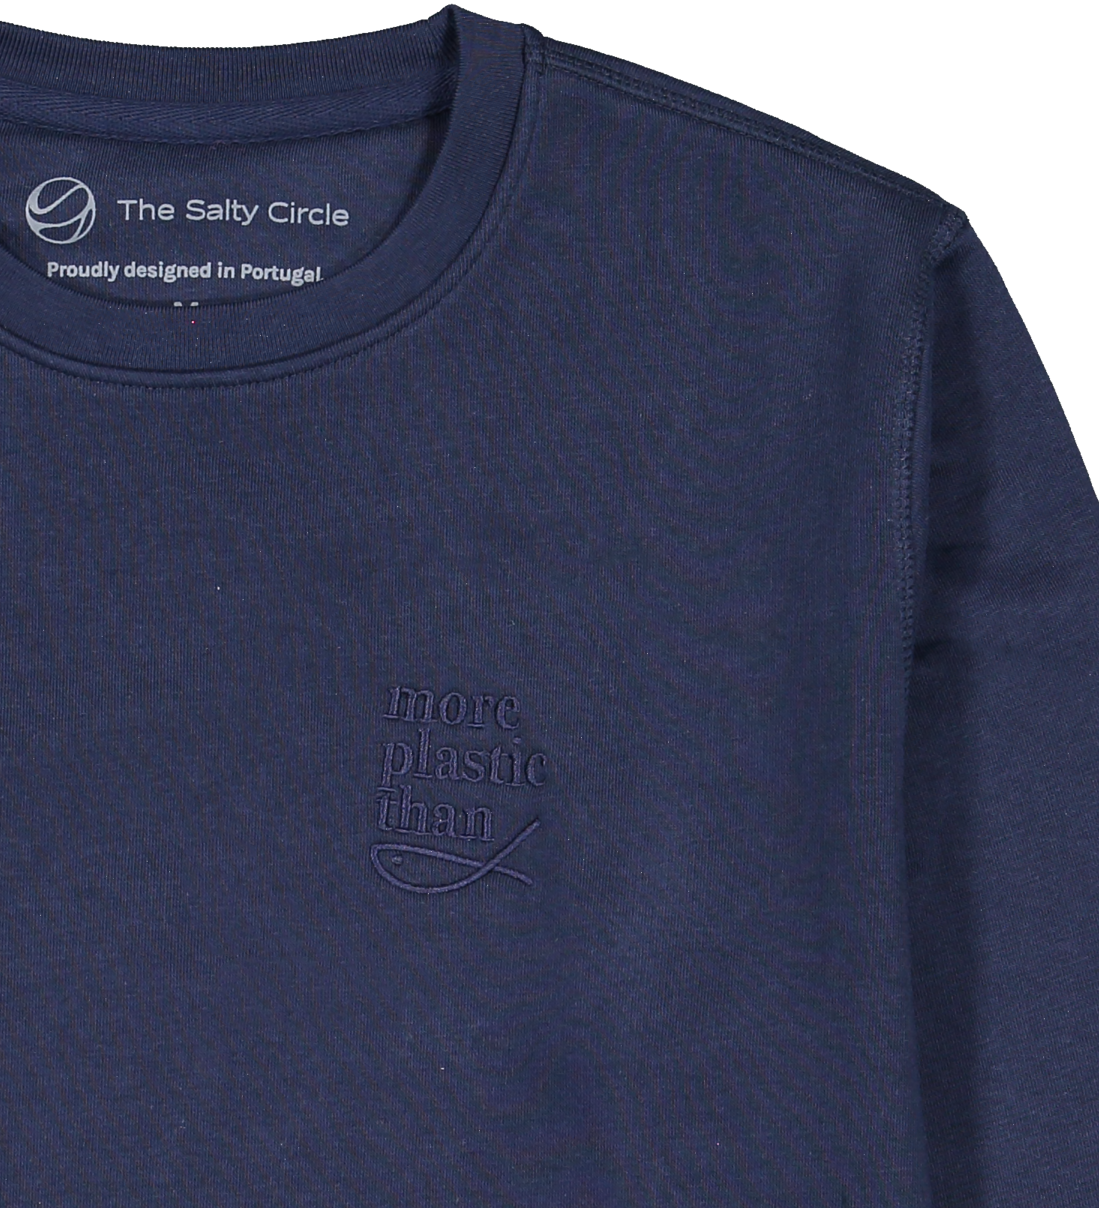 Navy Blue Crewneck Sweatshirt Organic Cotton